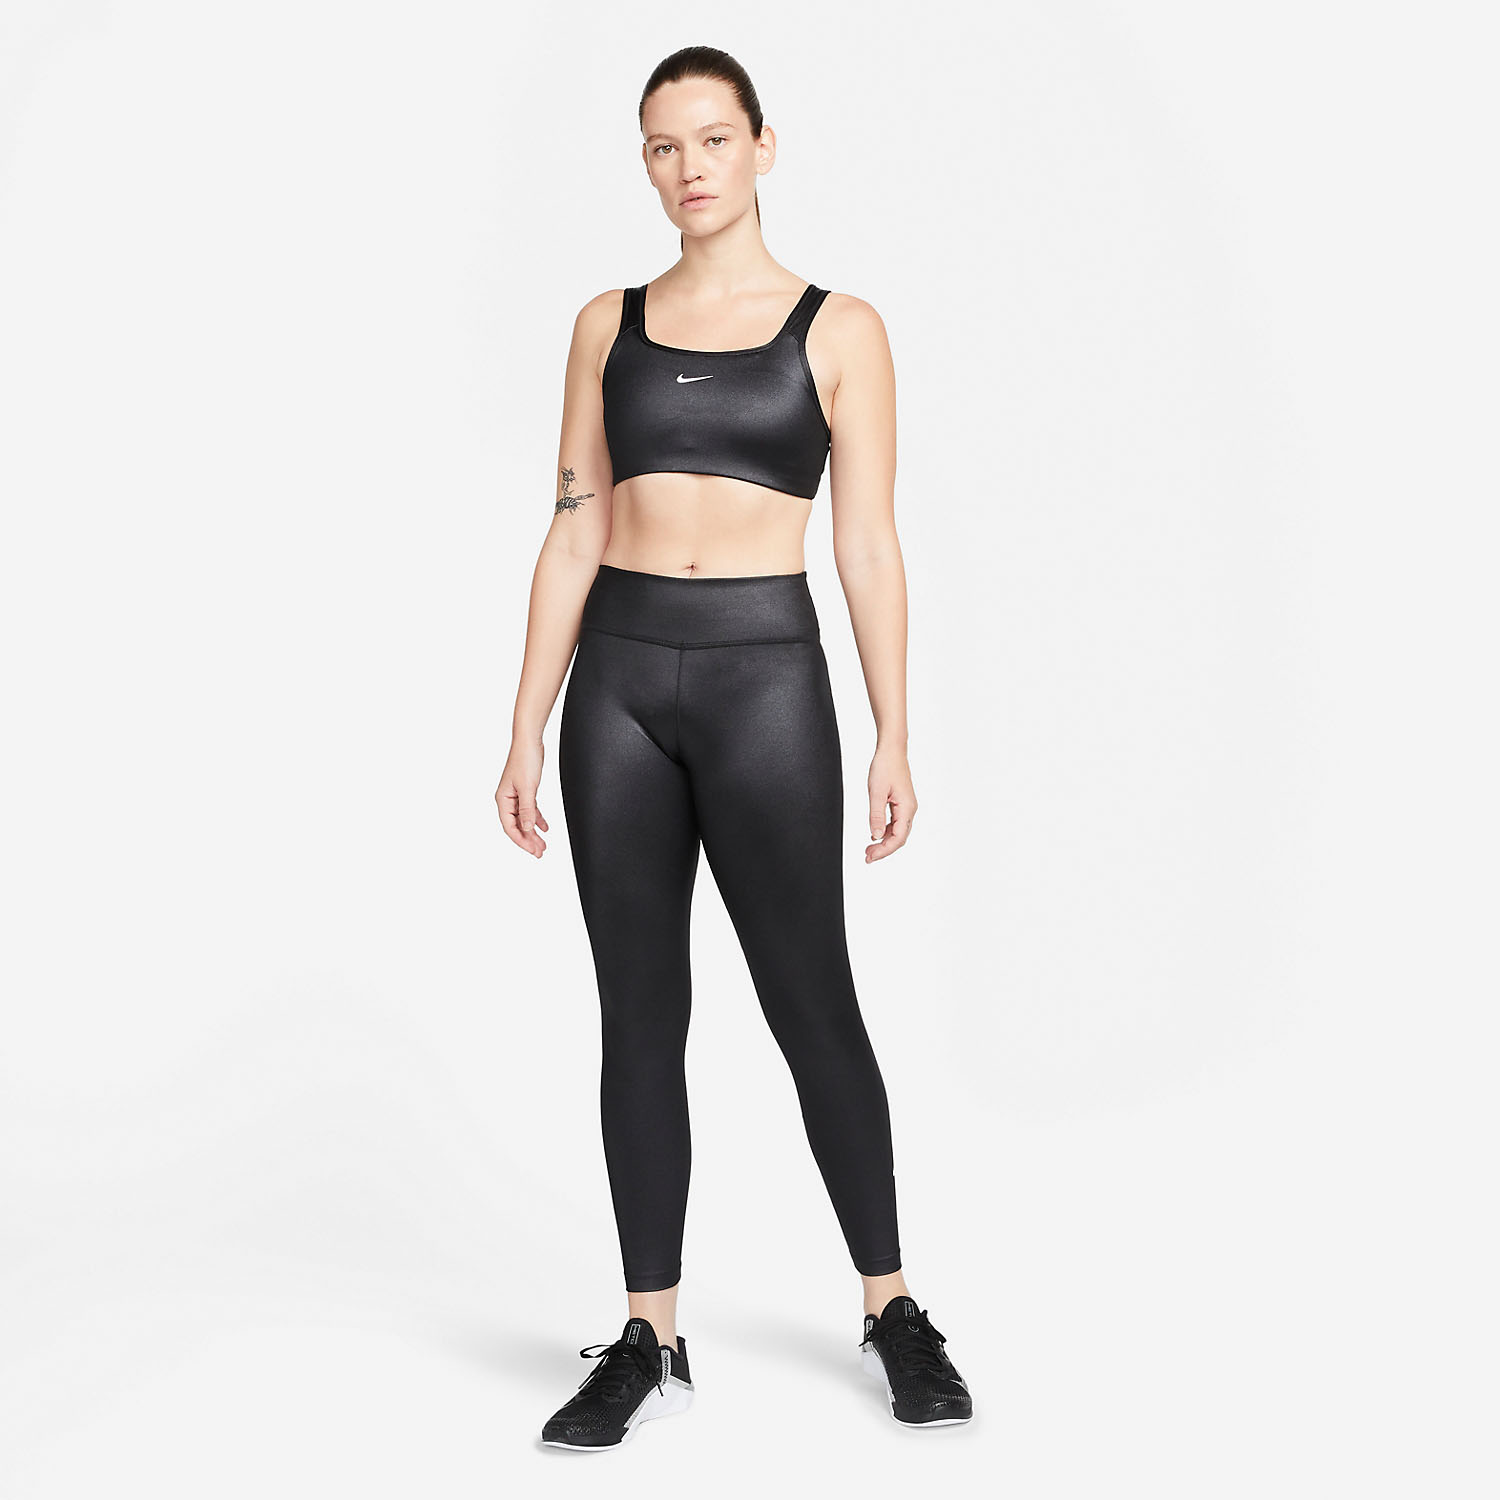 Nike Shine Women's Sports Bra - Black/White